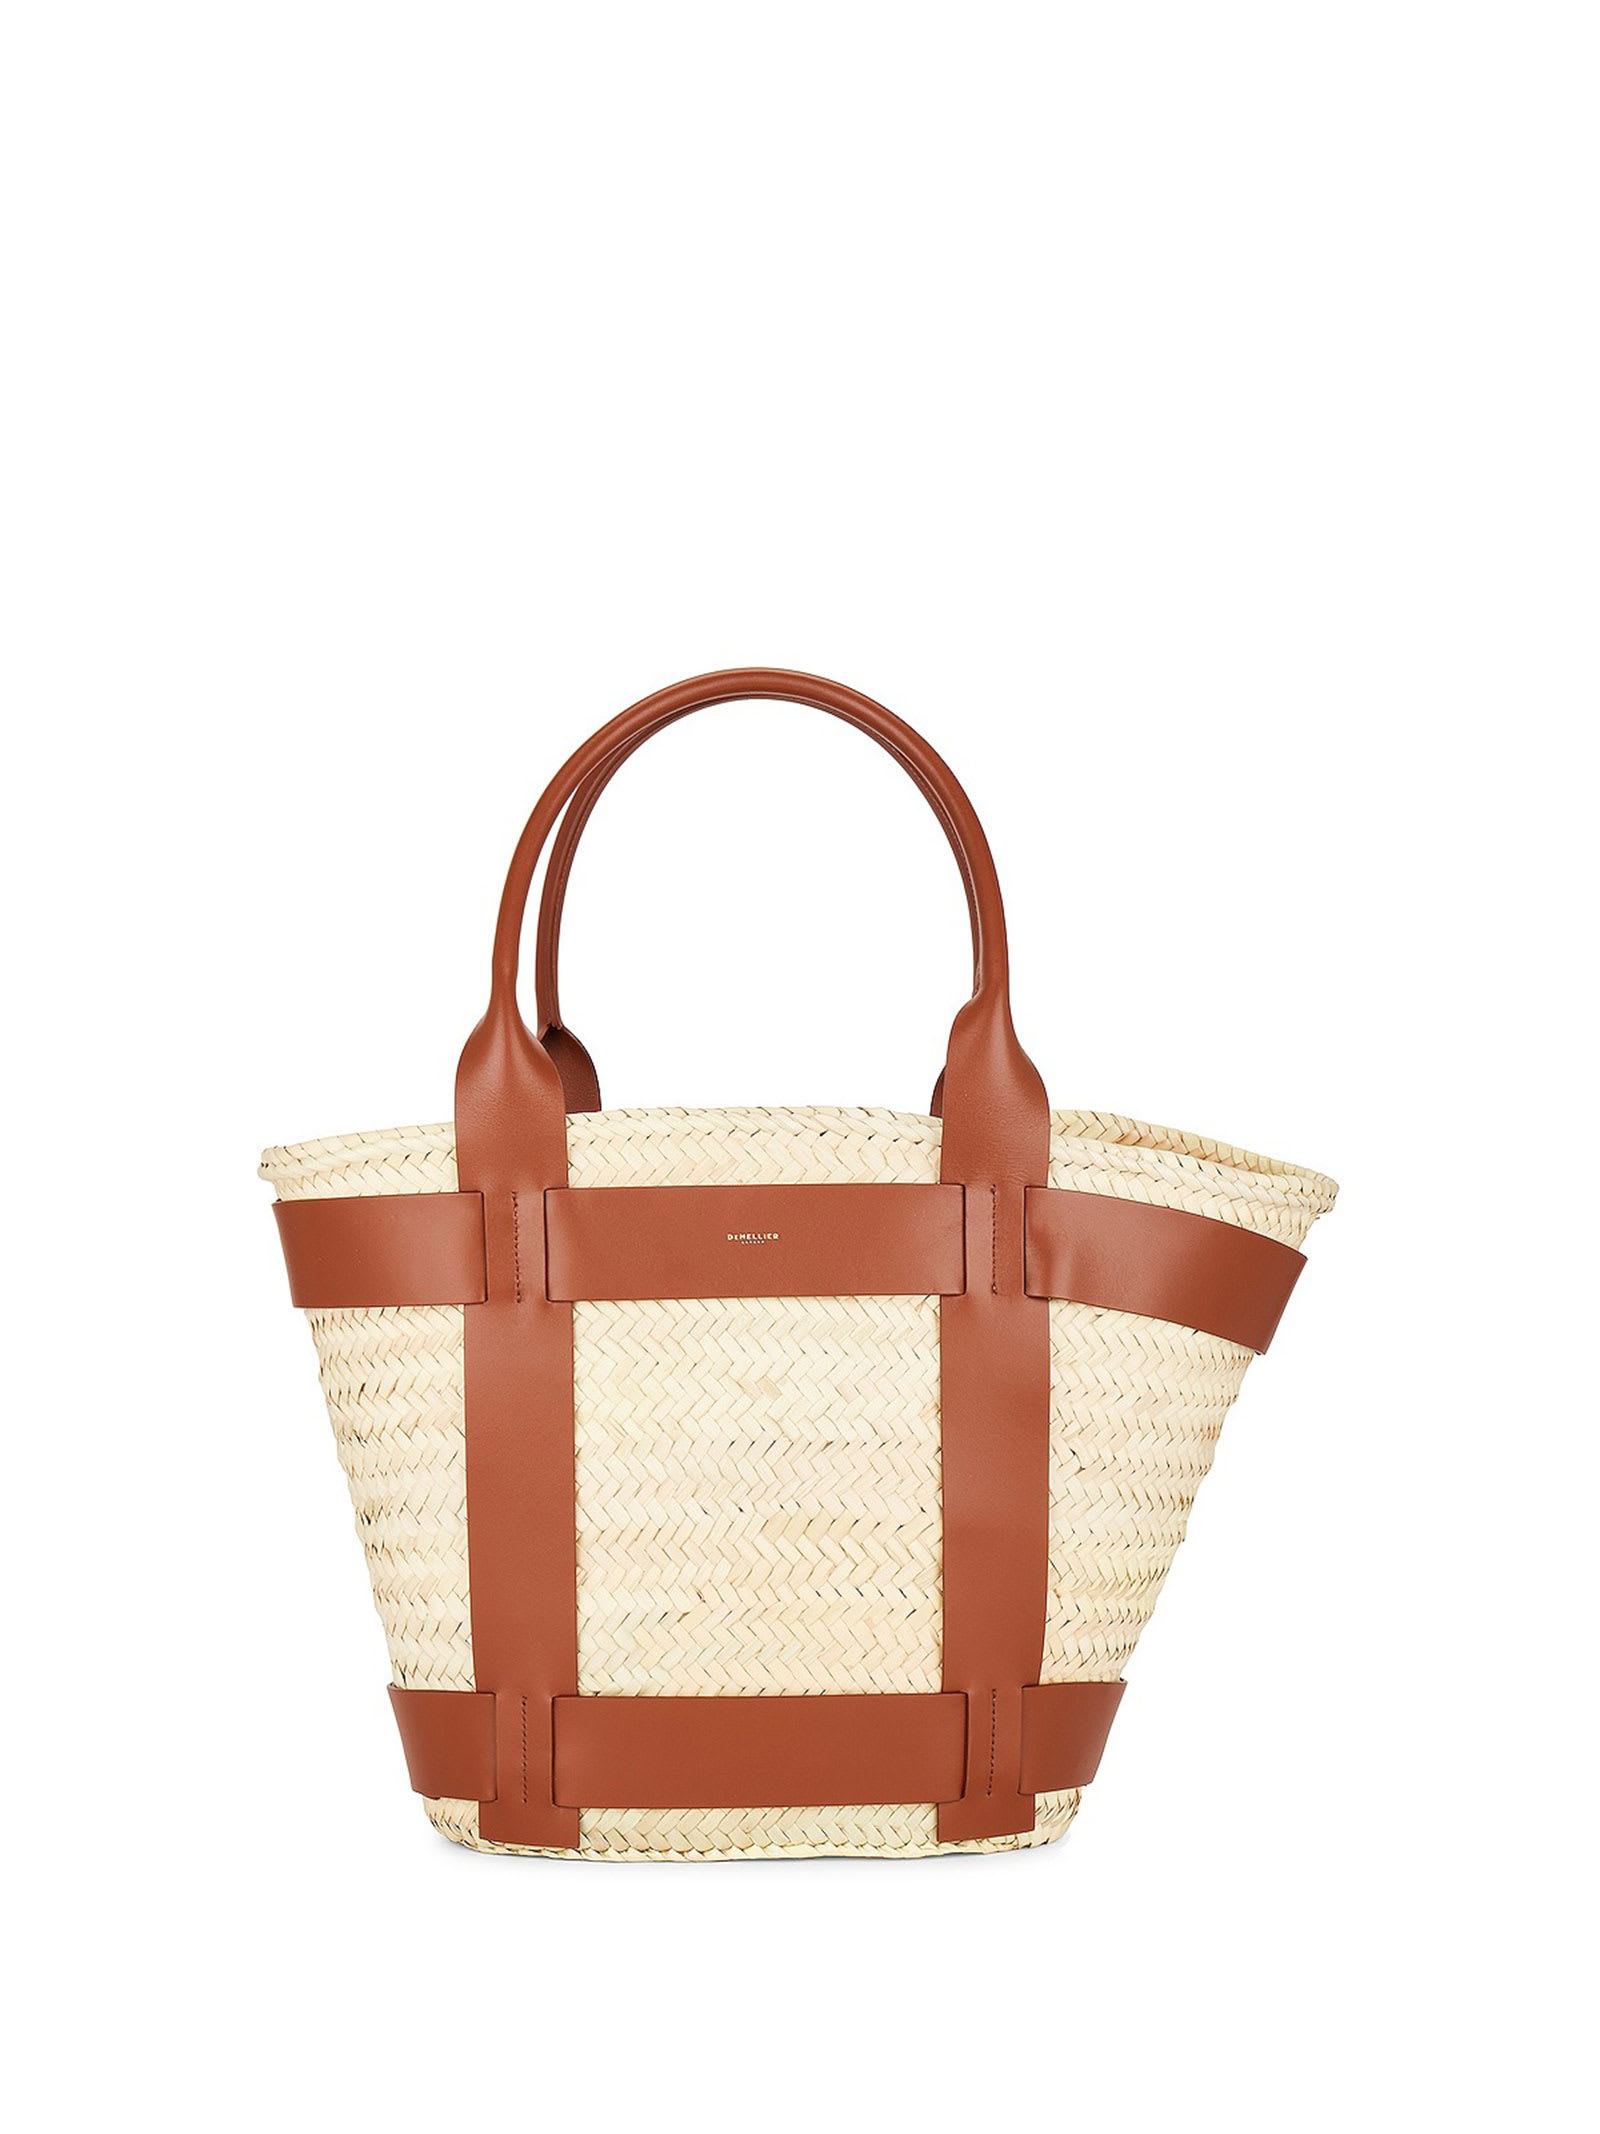 Demellier Maxi Santorini Bag In Raffia And Leather In Natural Tan